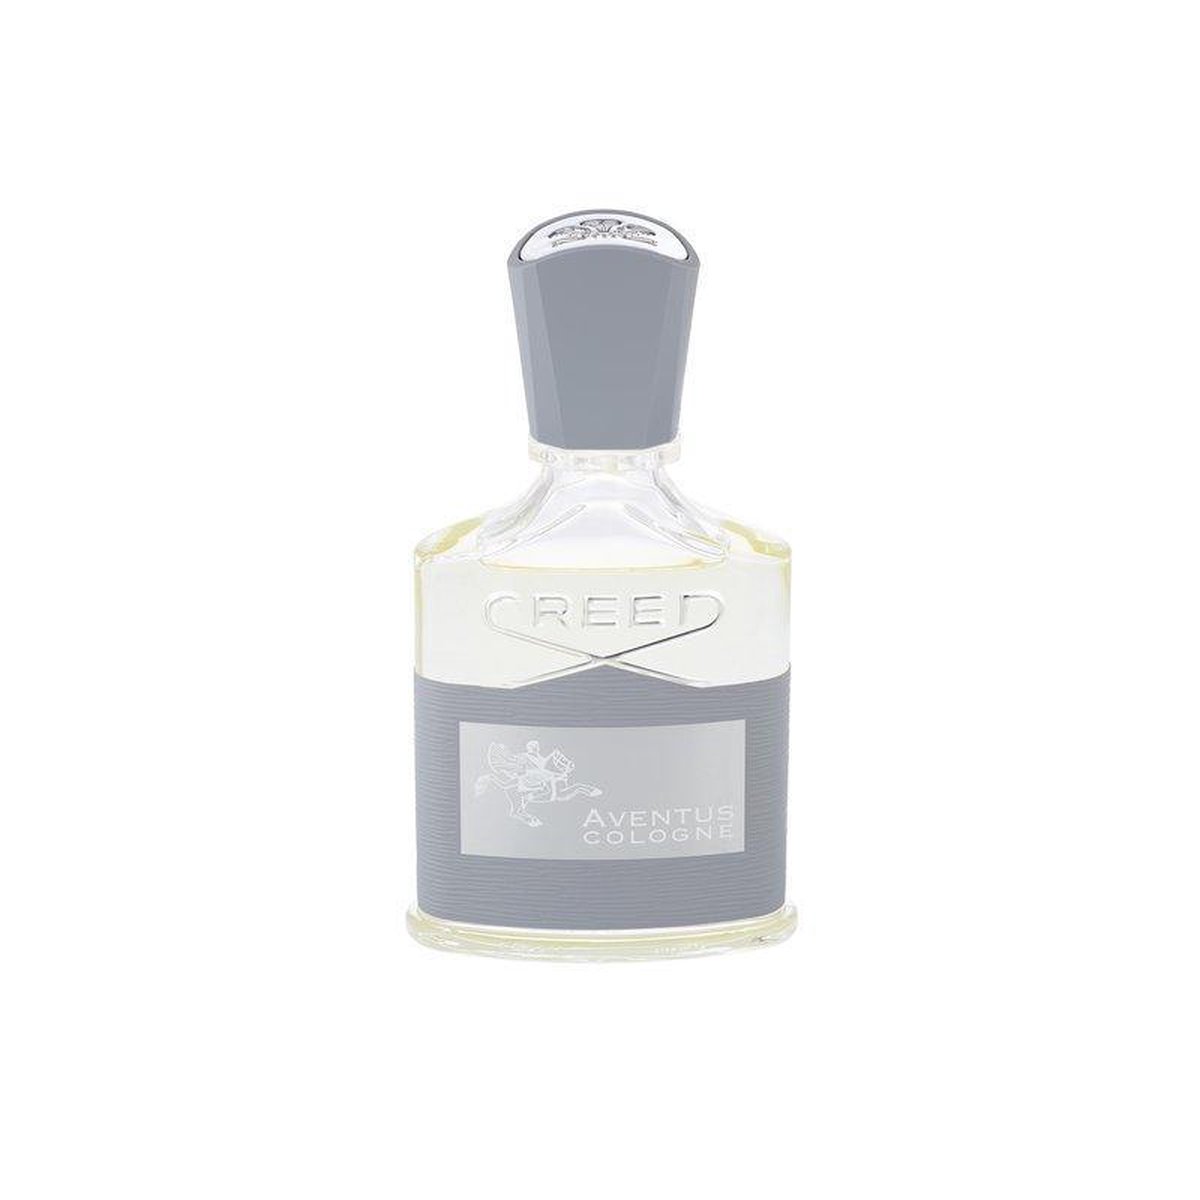 Aventus Cologne by Creed 100 ml - Eau De Parfum Spray